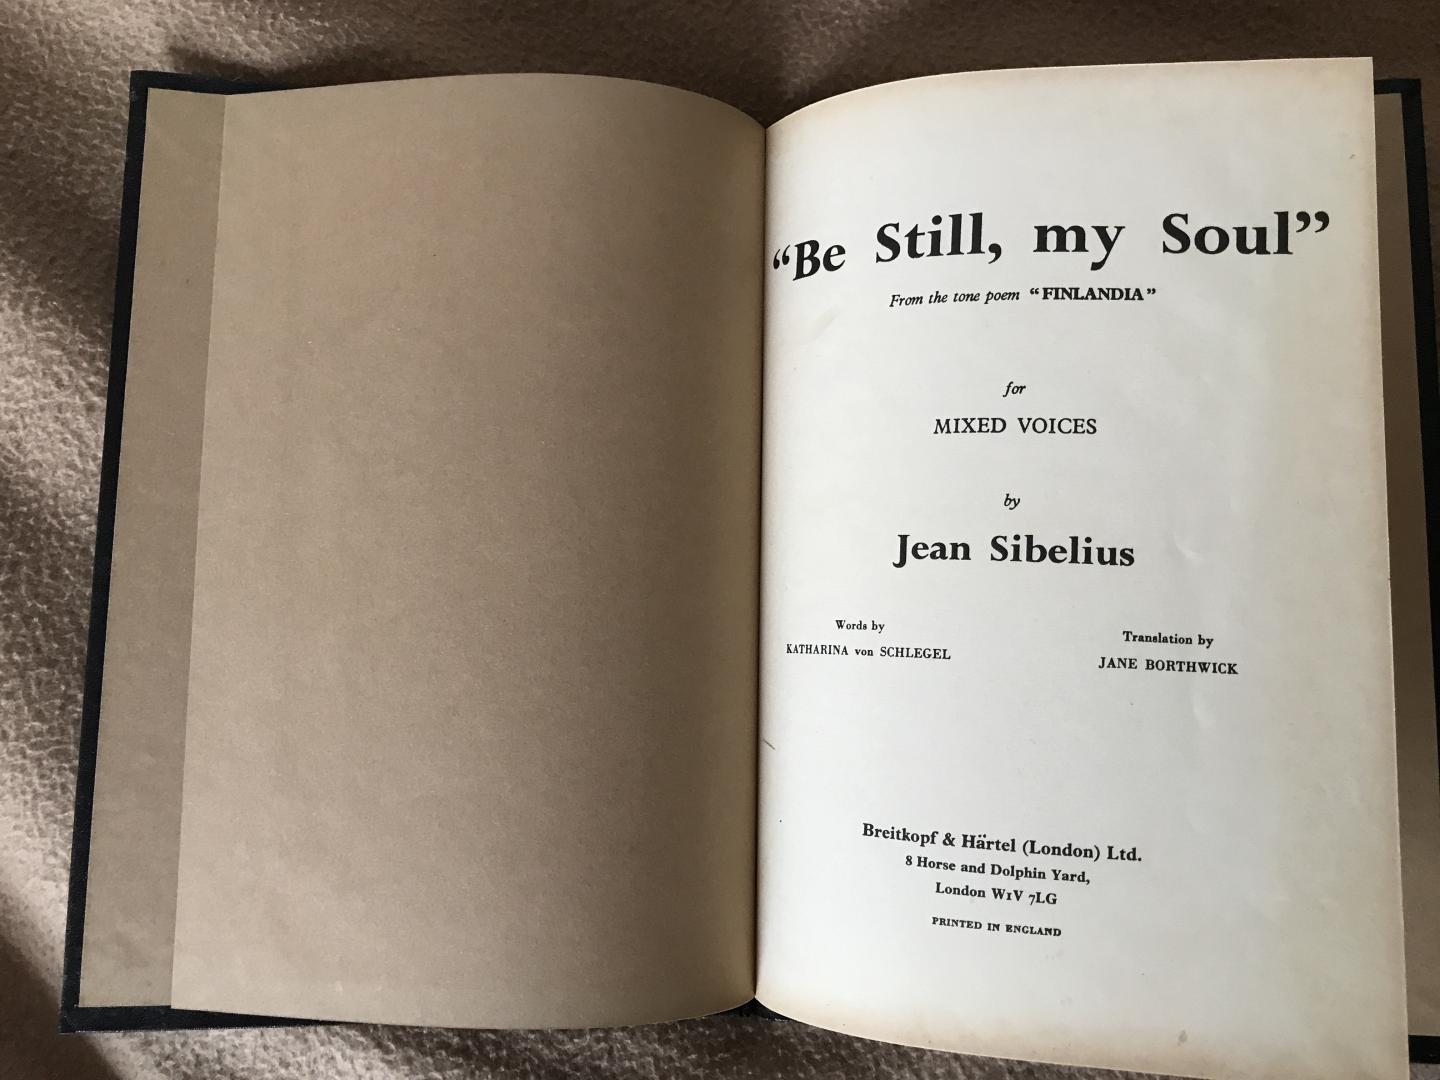 Sibelius, Jean - “Be Still, my Soul” from “Finlandia”